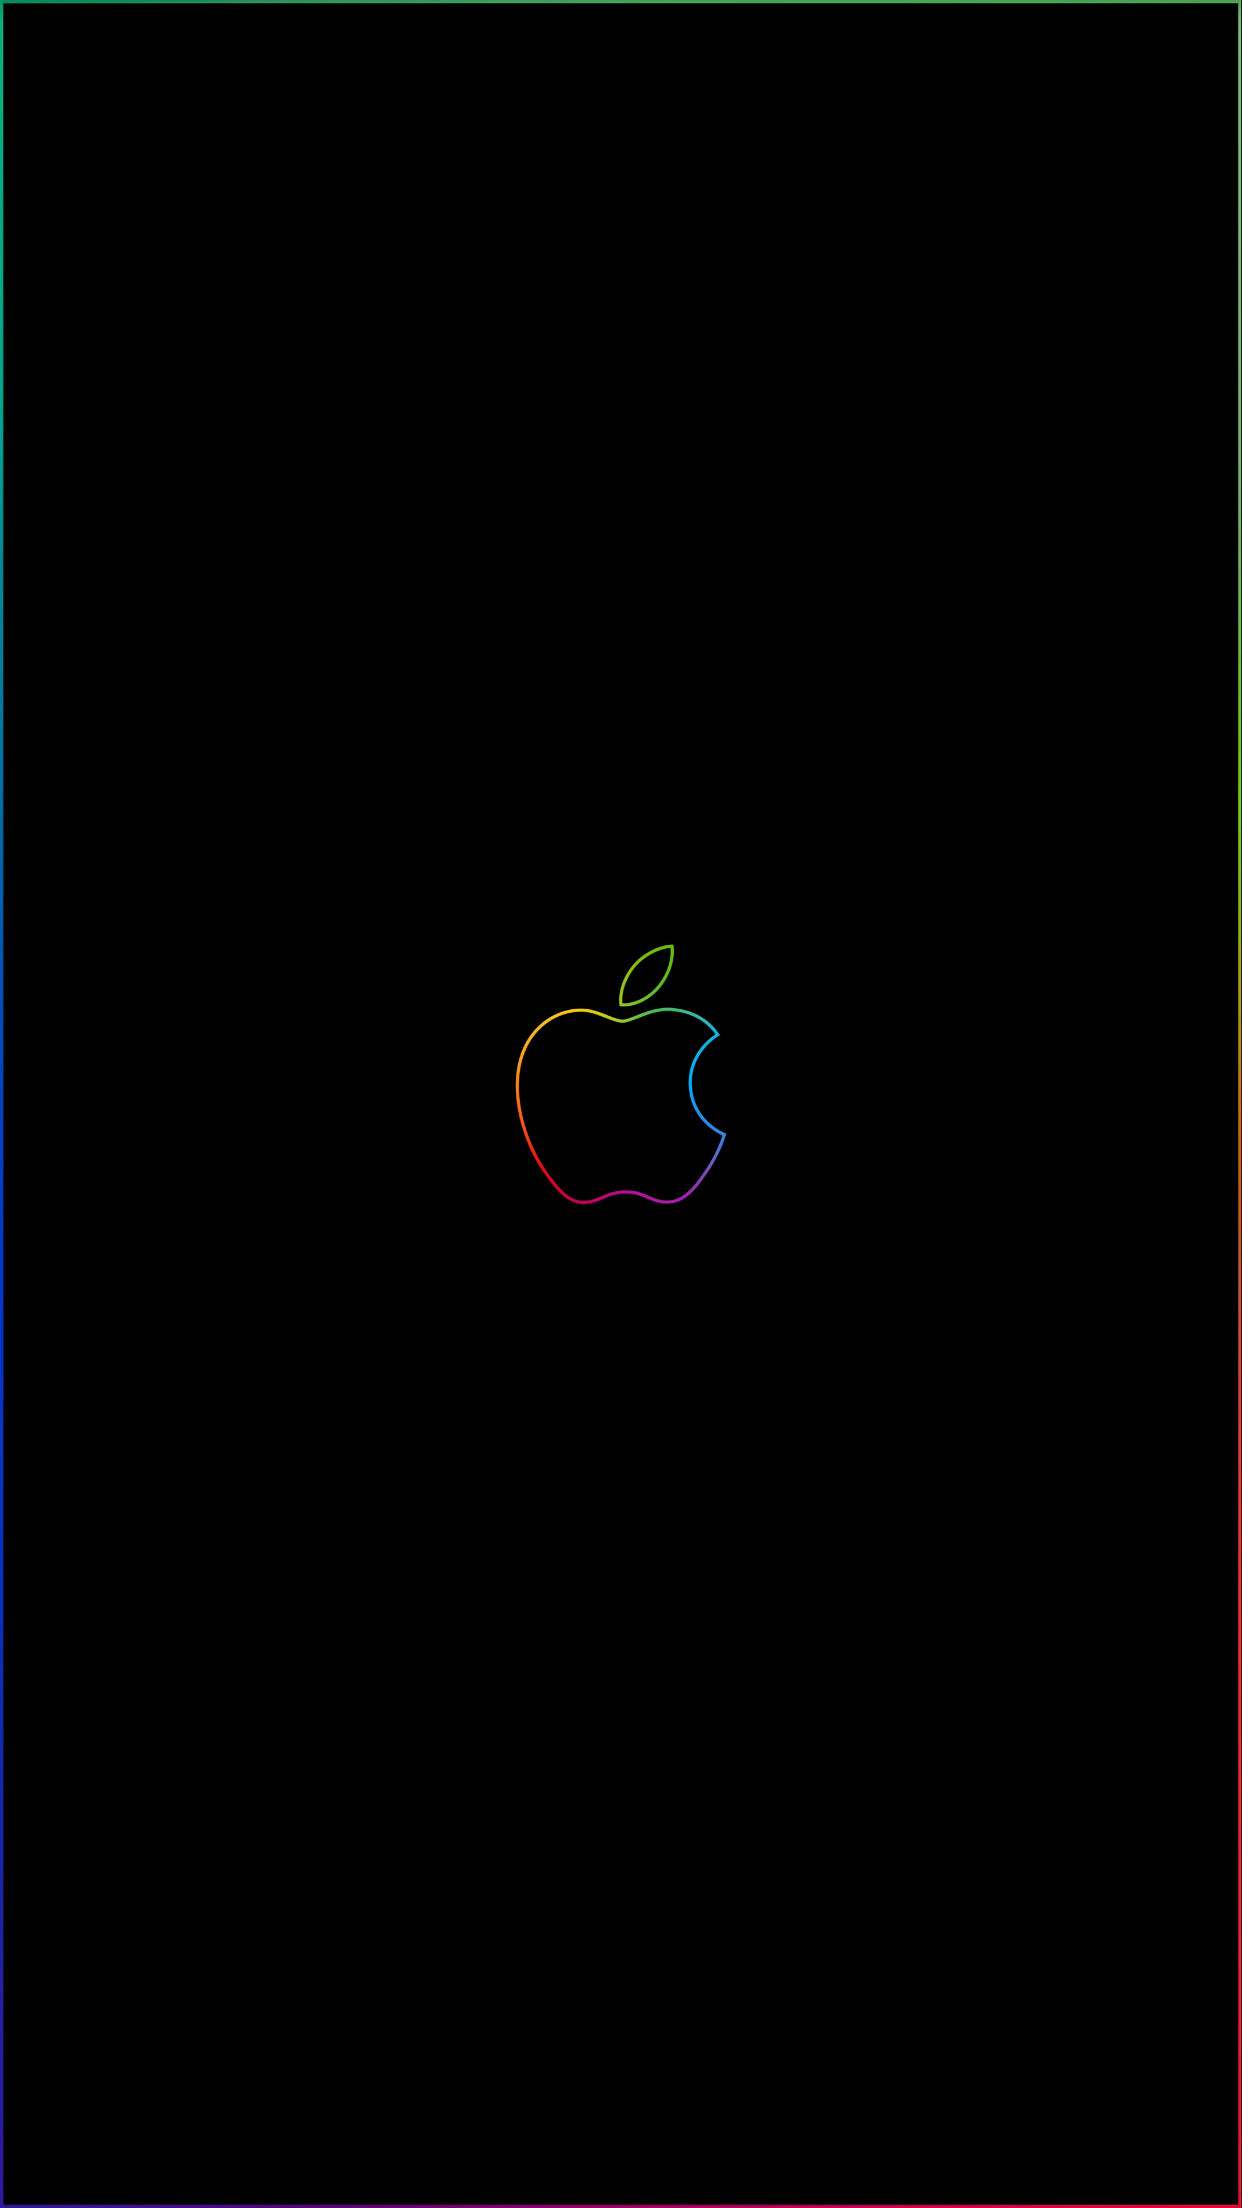 Rainbow border & apple logo iPhone wallpaper Imgur links: iphone